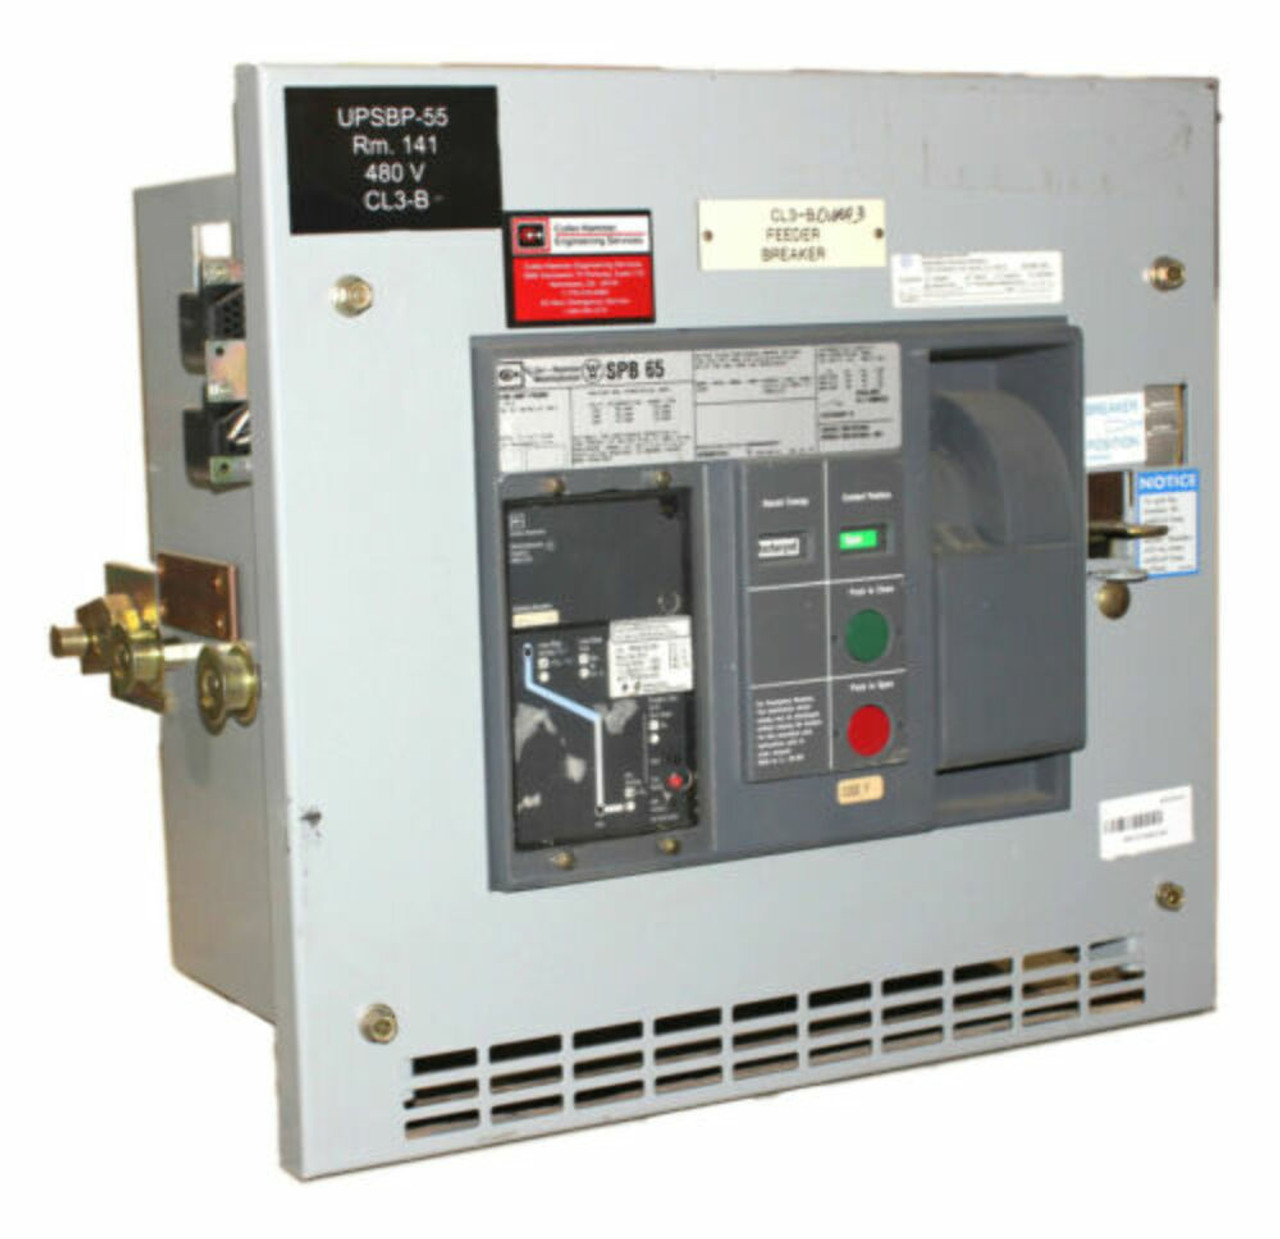 Cutler-Hammer SPB 65 Breaker 1200A 600V 3P 42kA with Digitrip RMS 510 S51LI; Auxiliary Switch SPBAUXC164 6A at 600V....